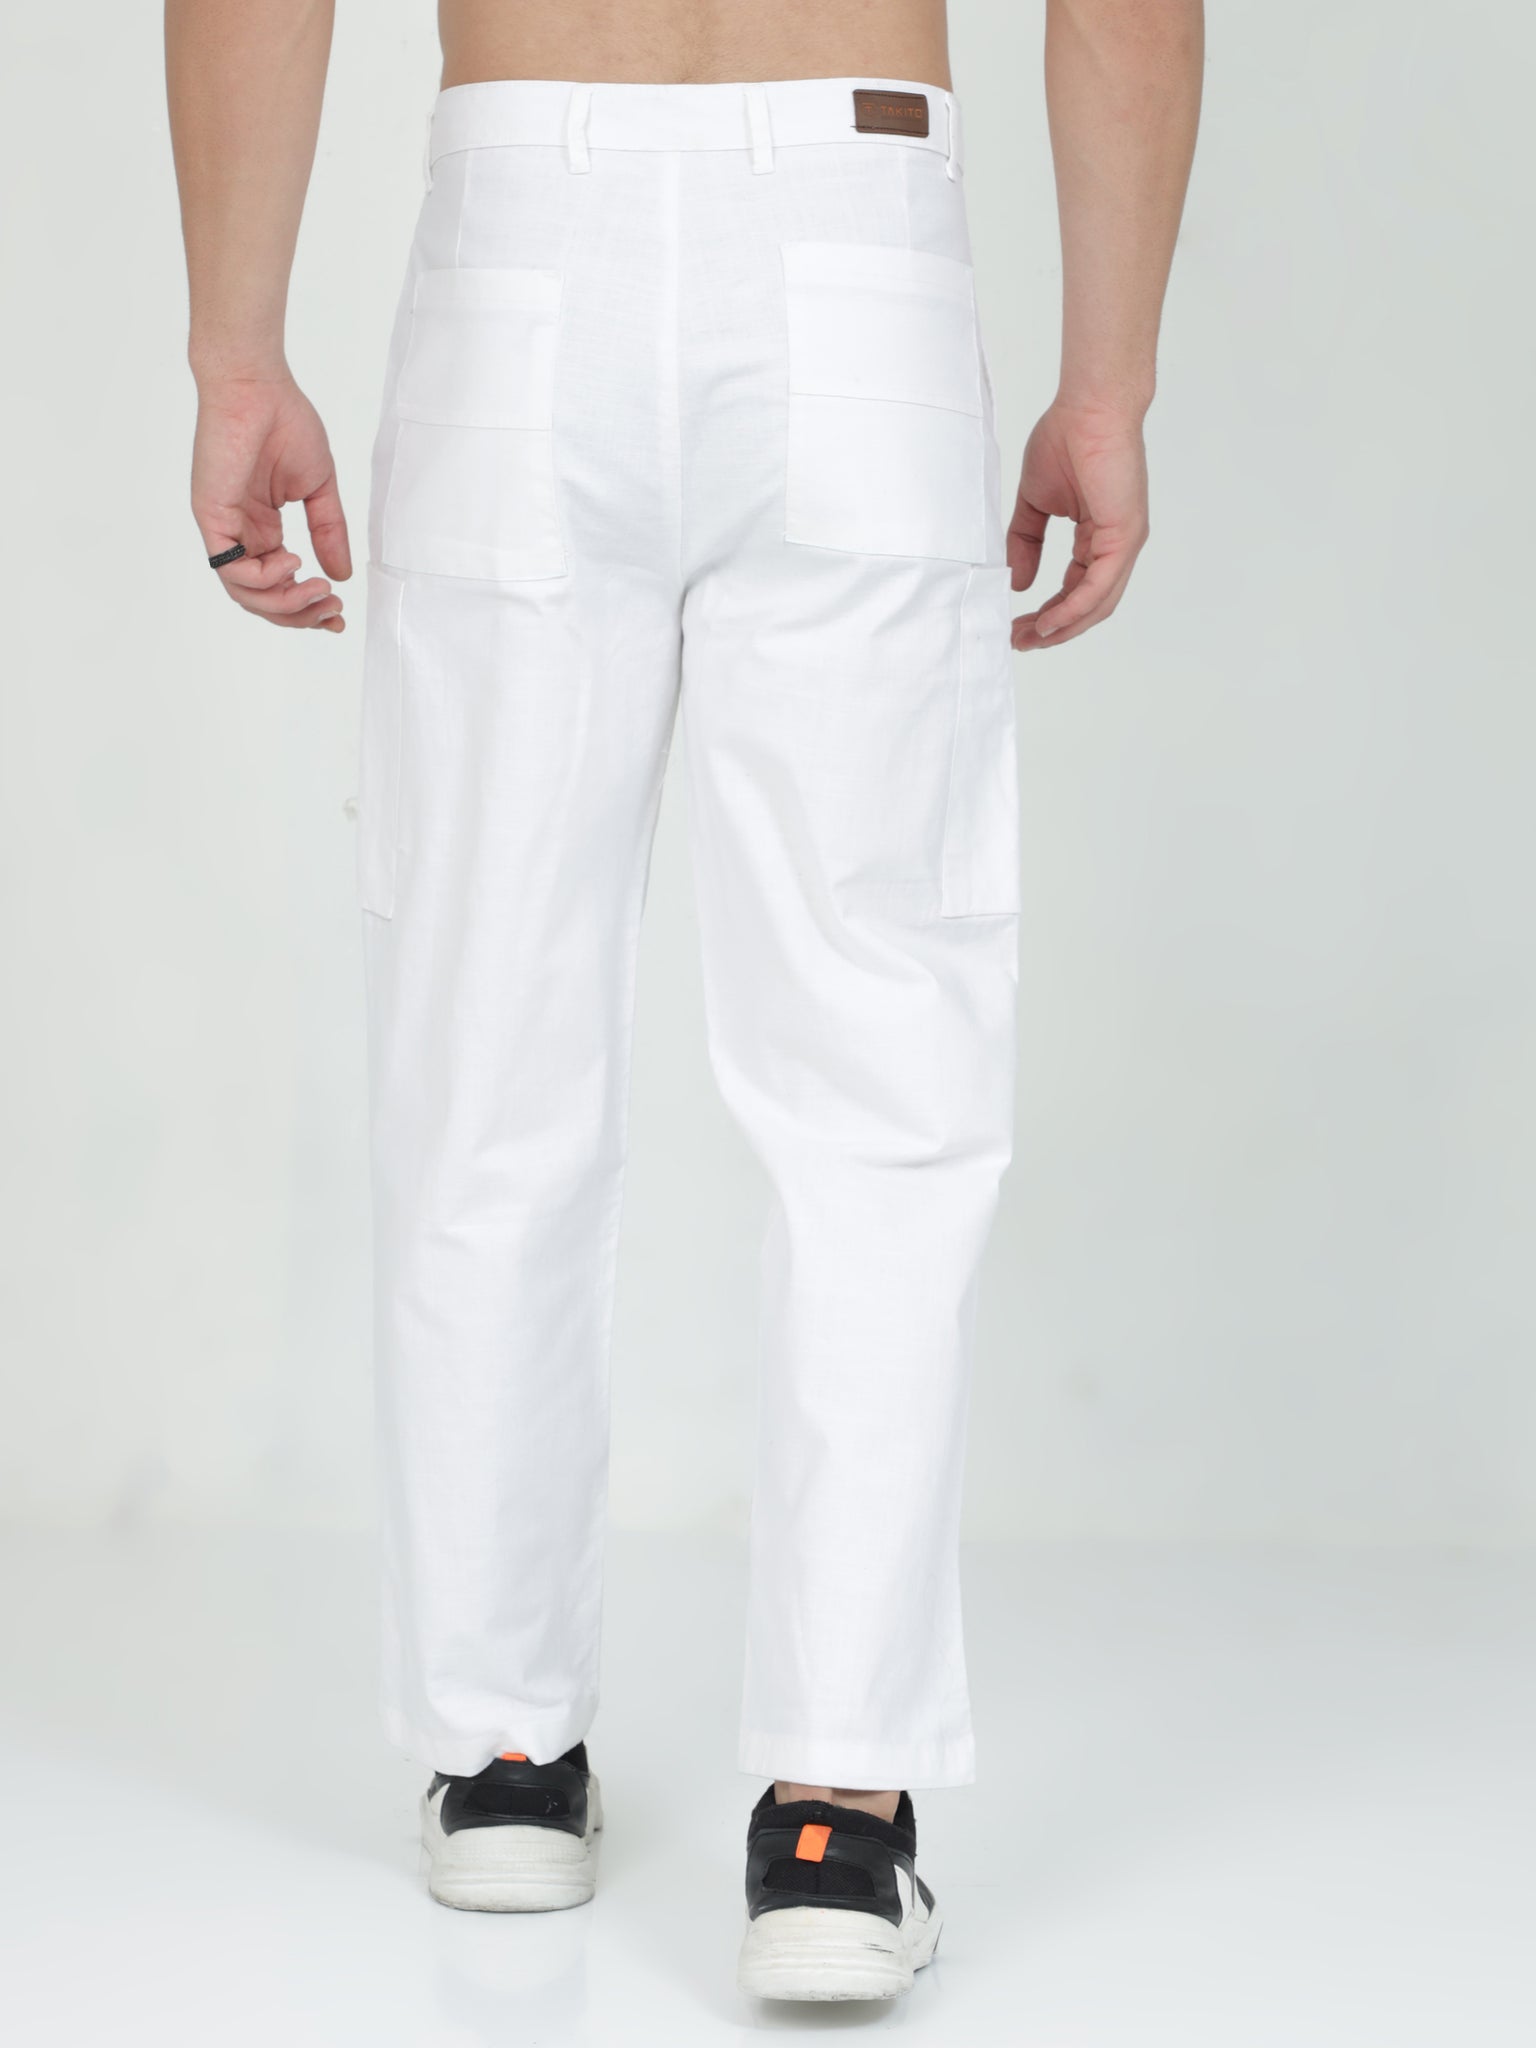 Koton Trousers and Pants  Buy Koton Women Off White Solid Plain  Comfortable Pant Online  Nykaa Fashion